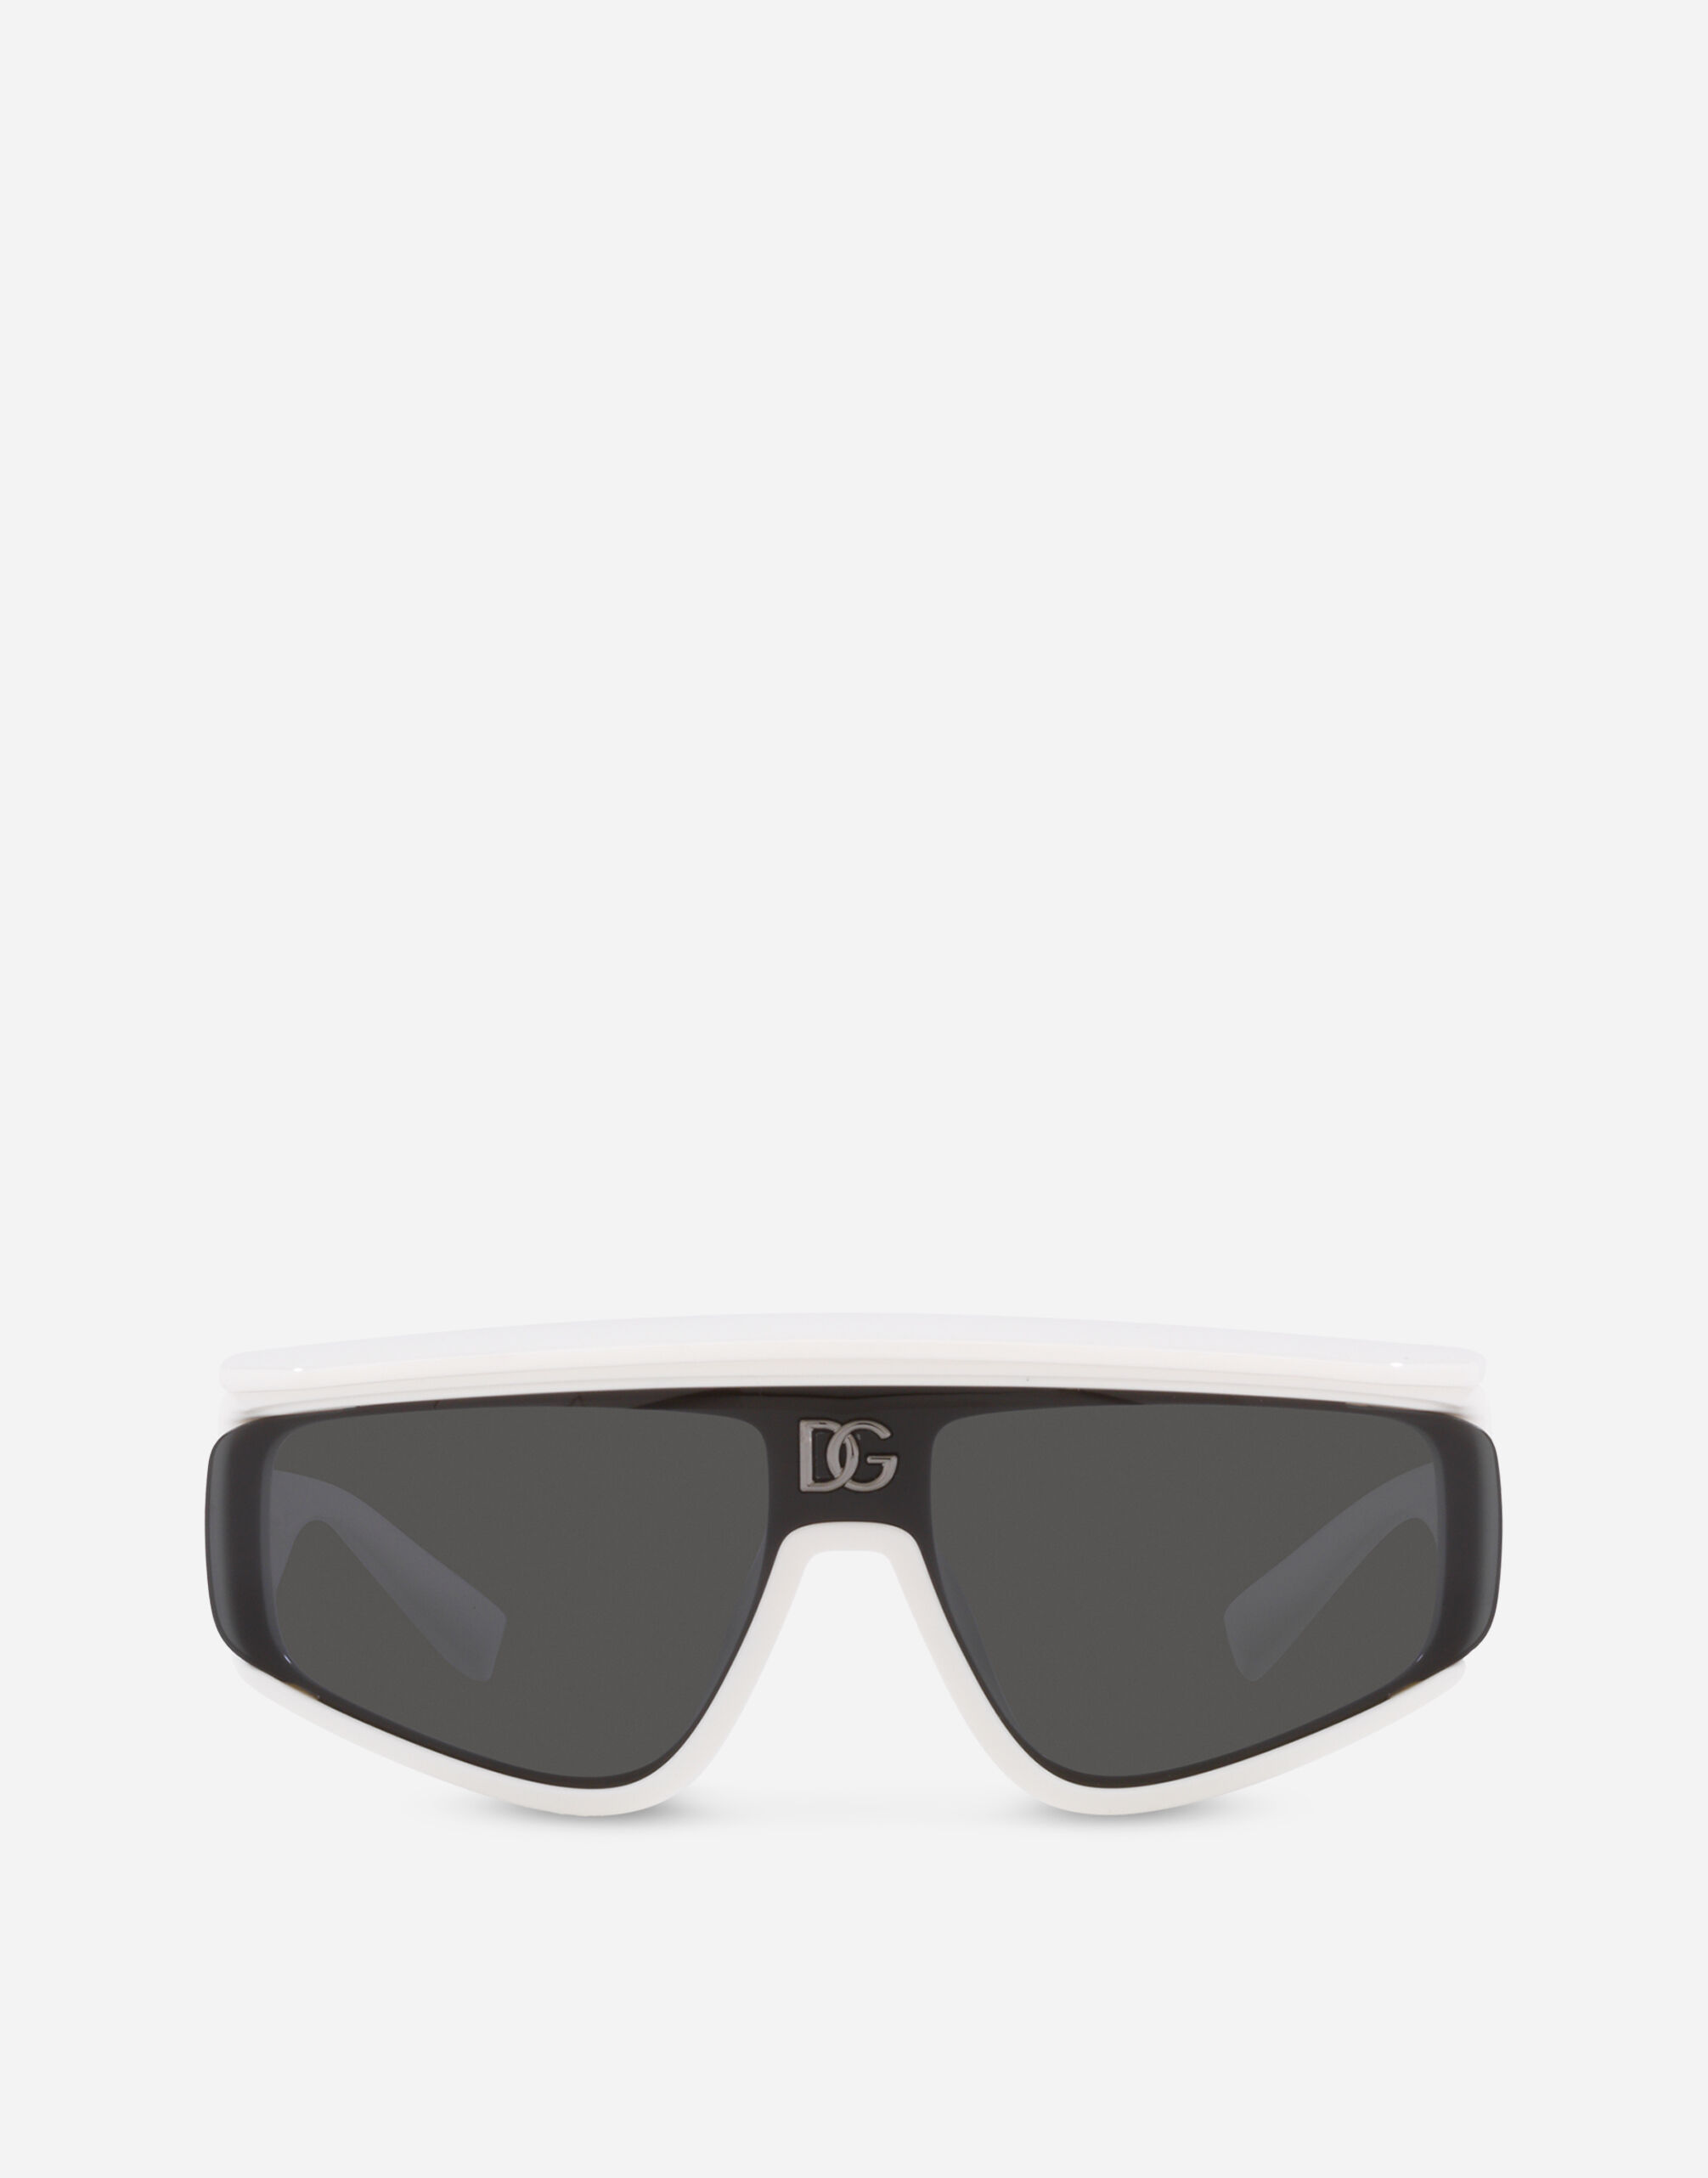 Dolce & Gabbana DG crossed sunglasses Black, gold and silver VG2233VM7K1